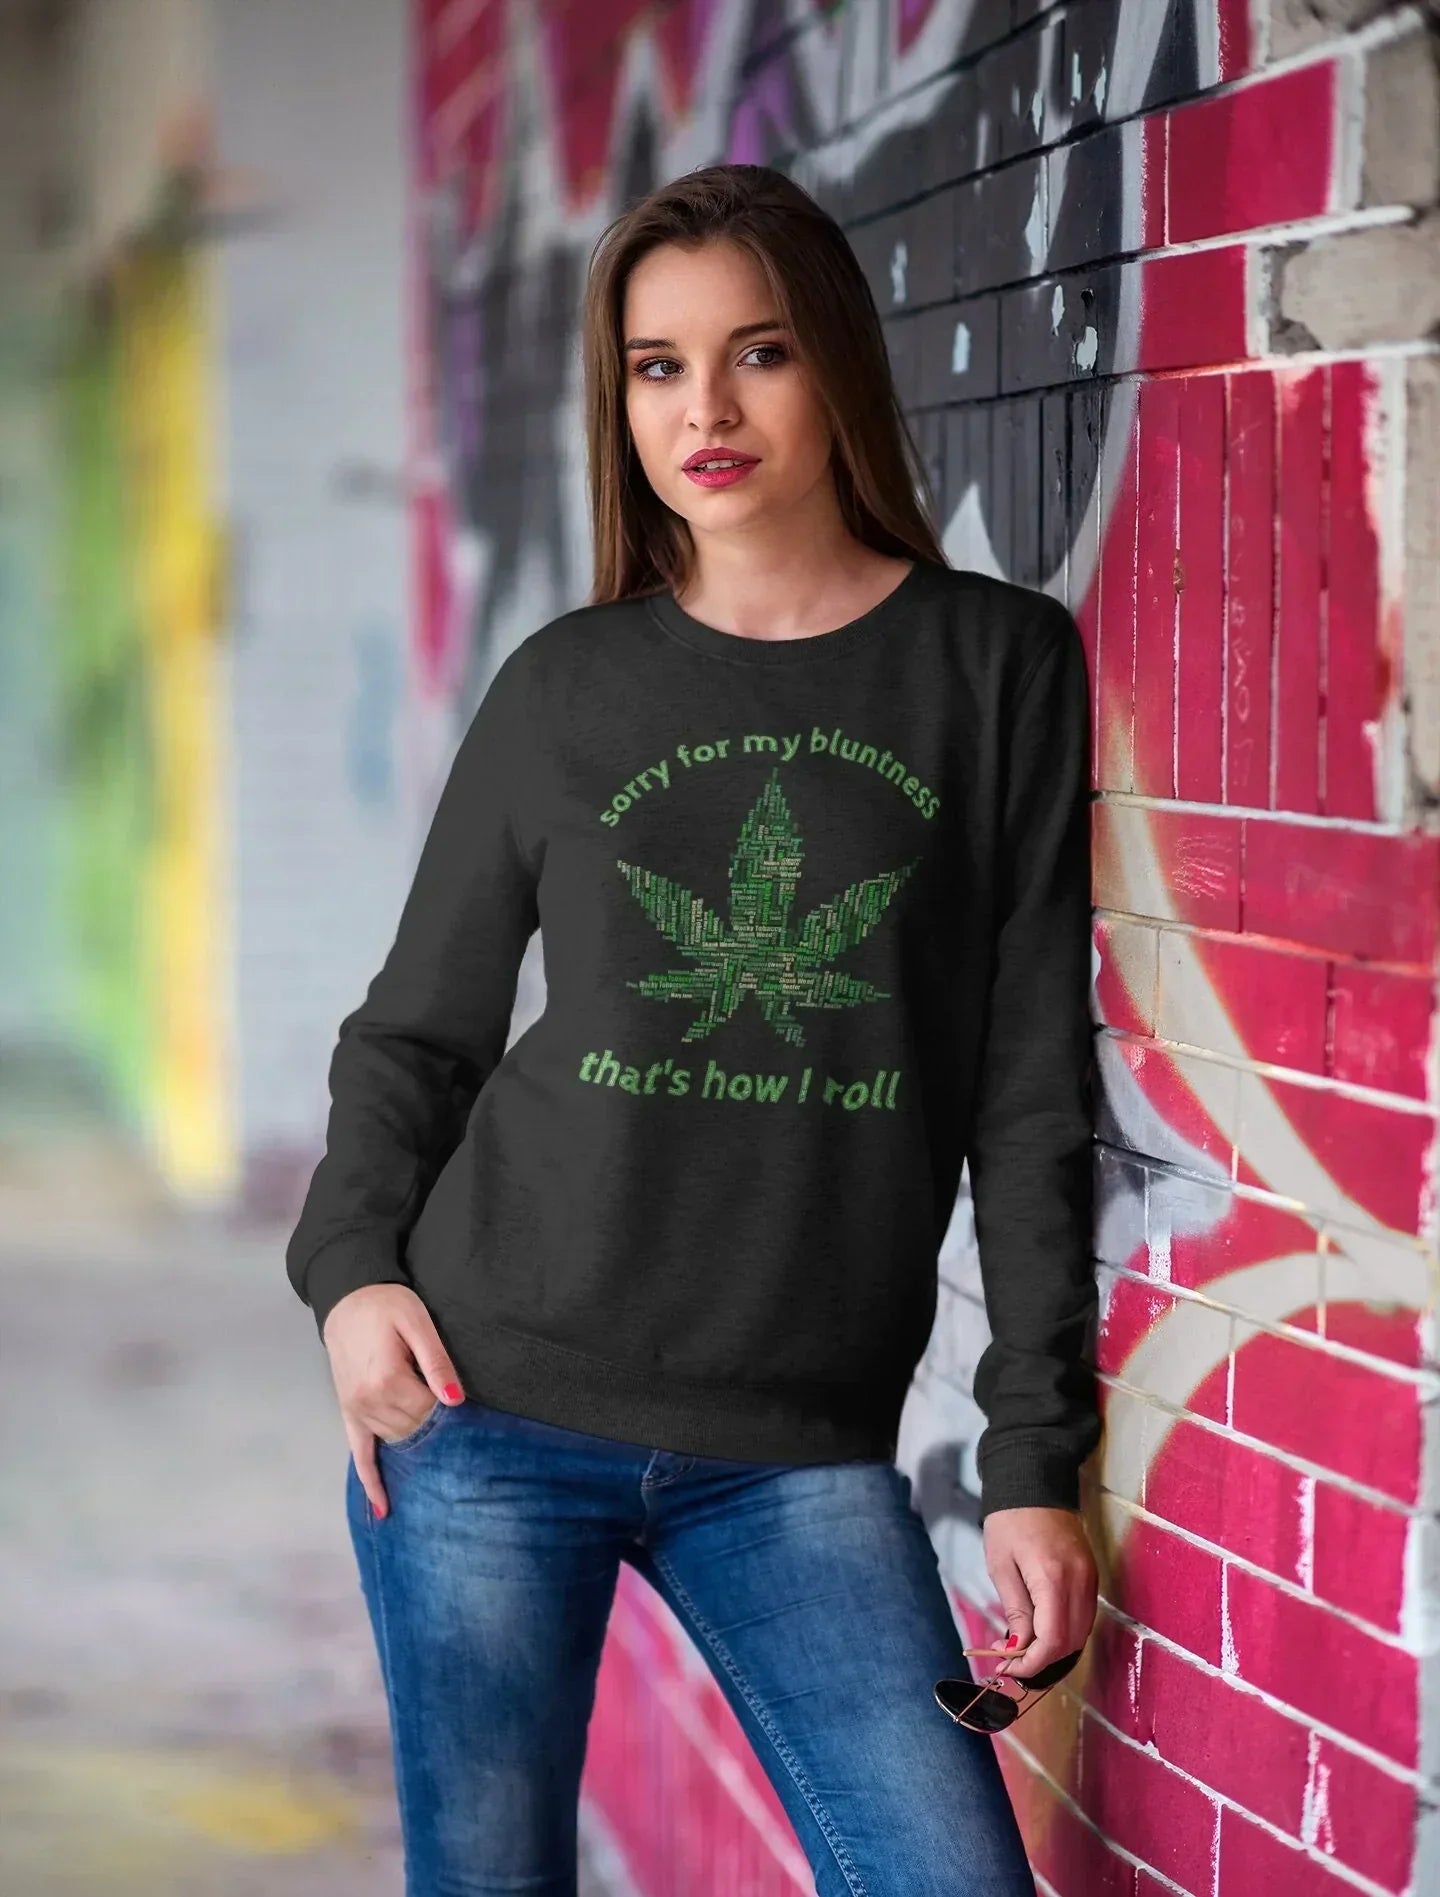 Stoner Shirt, Hippie Clothes, Marijuana Gift, Stoner Gifts for Her, Weed Shirt, 420 Gifts, Stoner Girl Tops, 420Gifts for Women, Bluntness